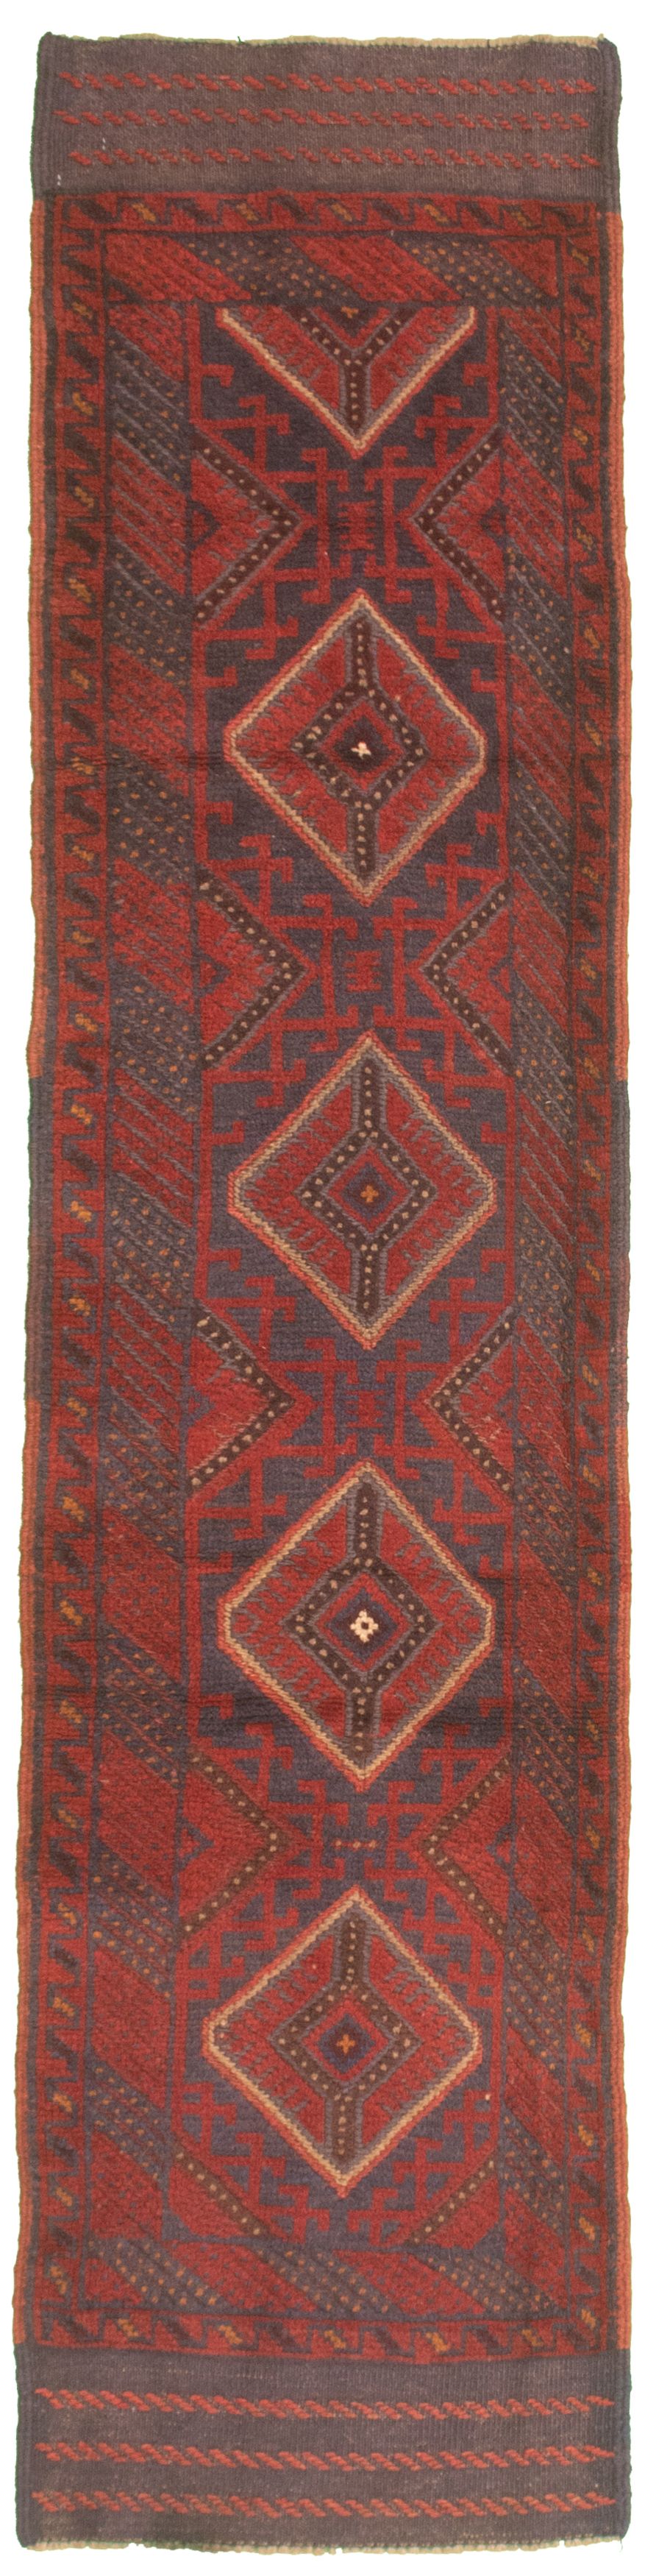 Hand-knotted Tajik Caucasian Red Wool Rug 2'0" x 8'8"  Size: 2'0" x 8'8"  